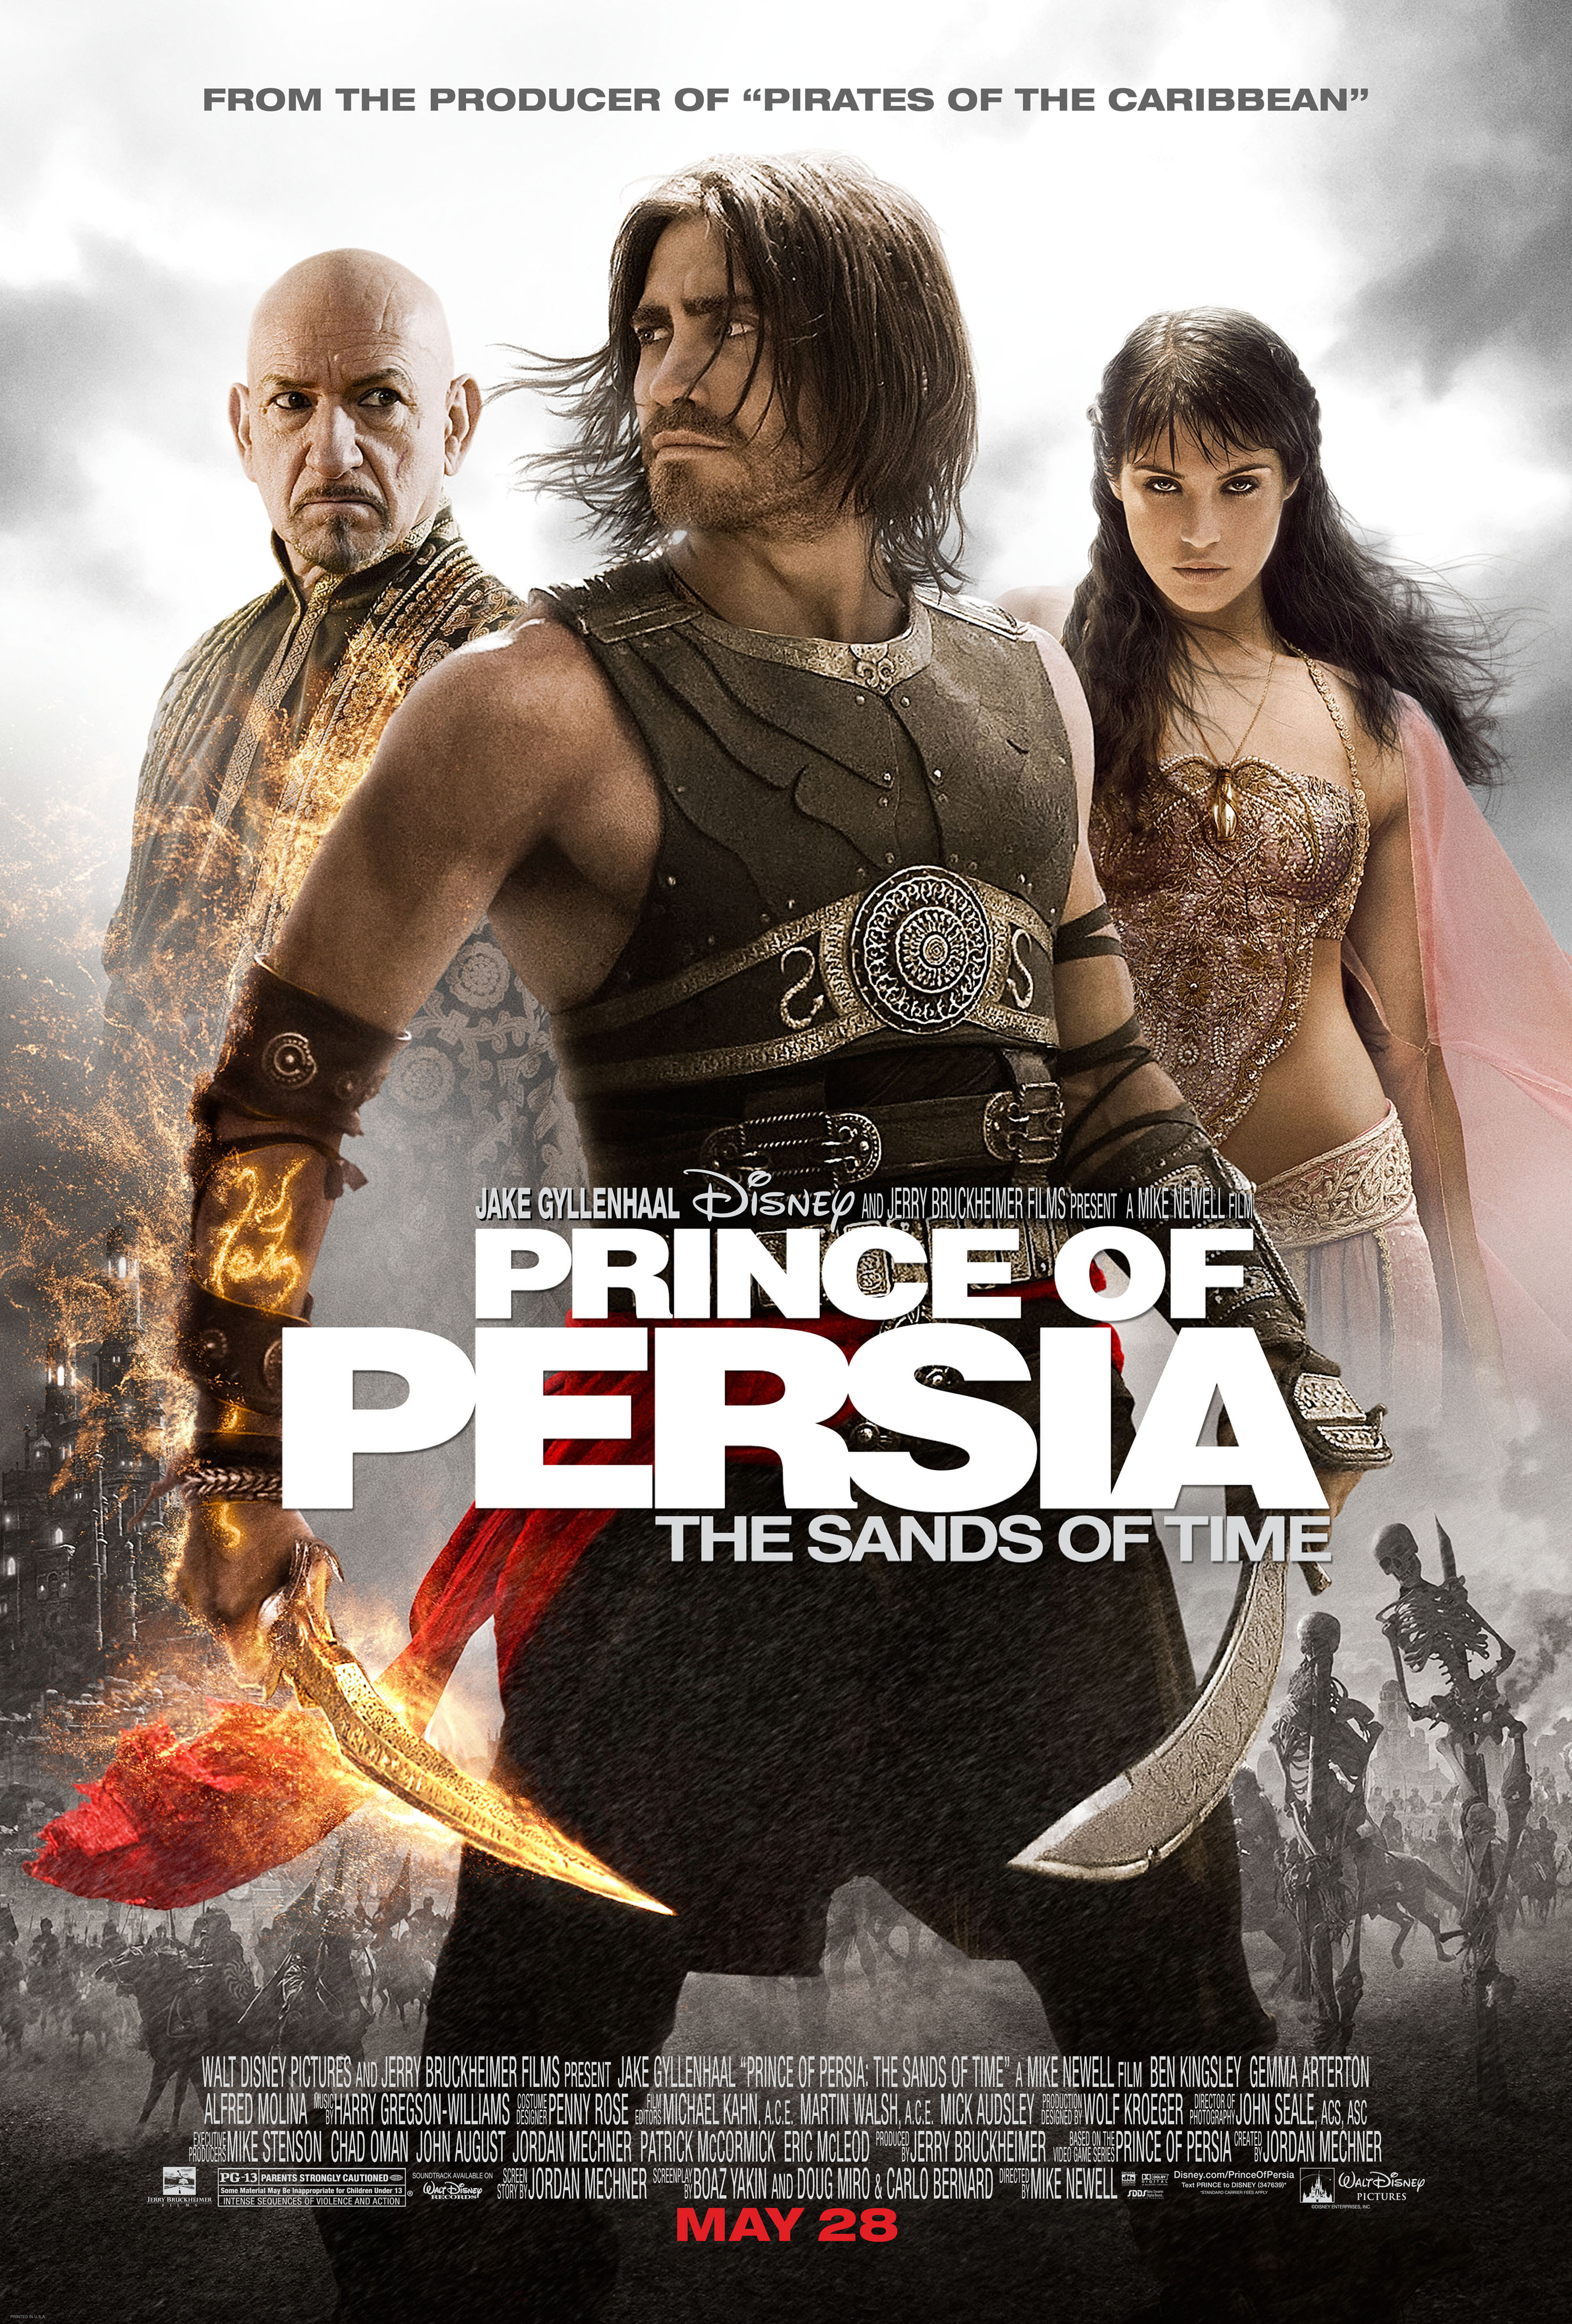 Prince of Persia, Gemma Arterton, Jake Gyllenhaal, movie posters, Ben Kingsley - desktop wallpaper